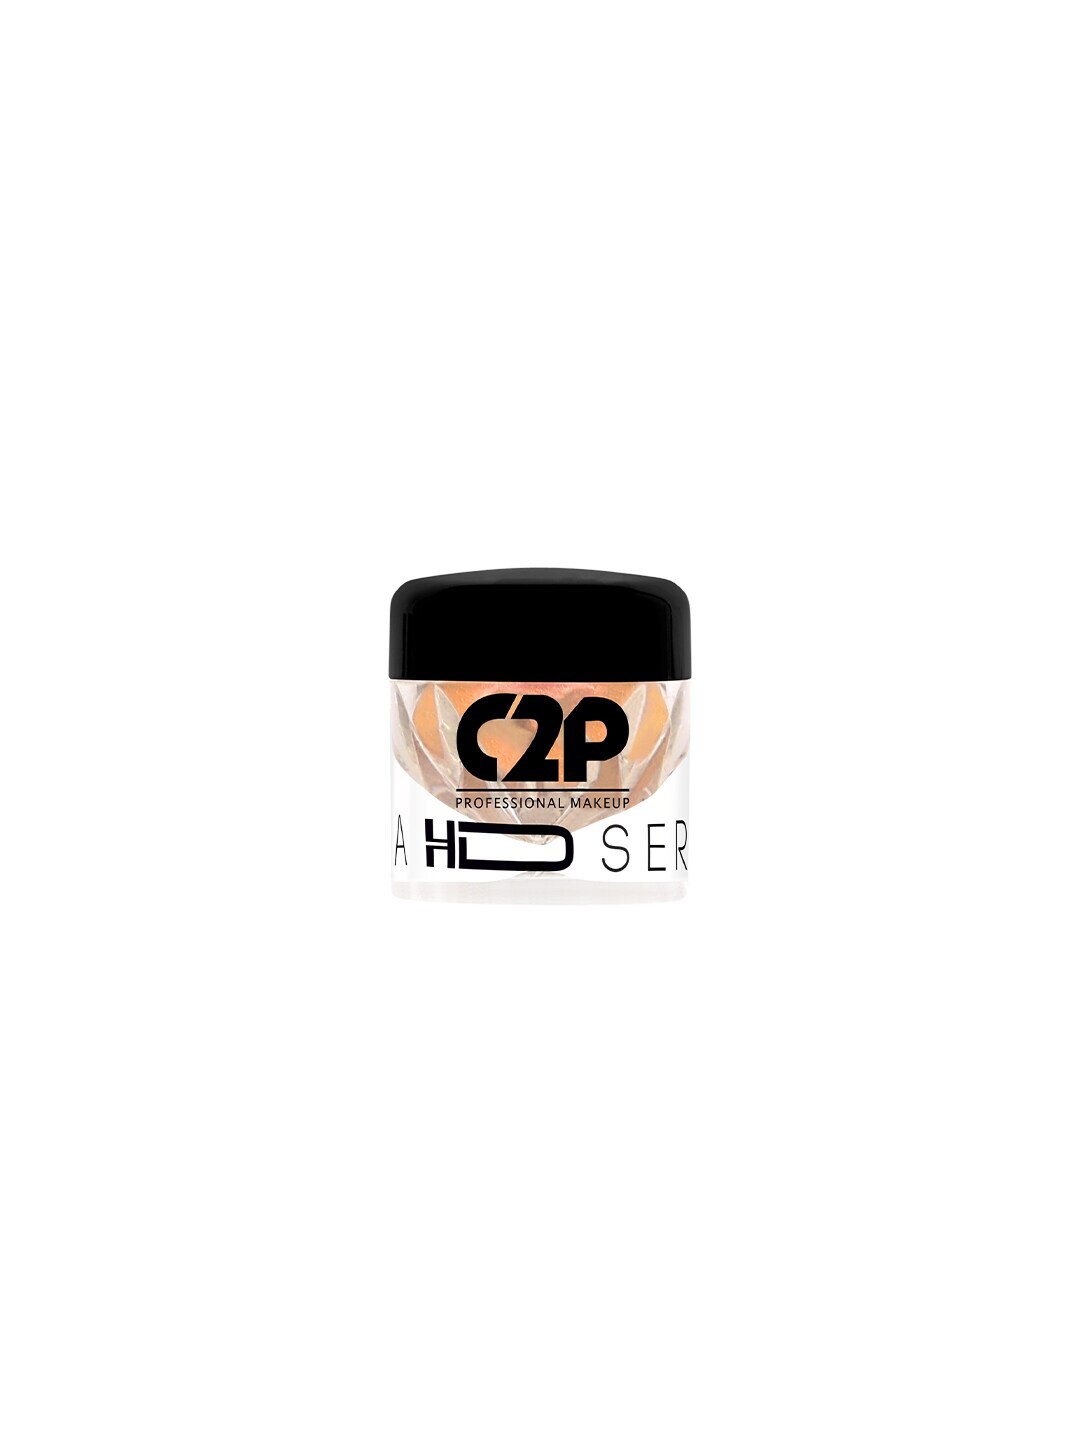 C2P PROFESSIONAL MAKEUP HD Loose Precious Pigments Eyeshadow - Shinny Winny 190 Price in India